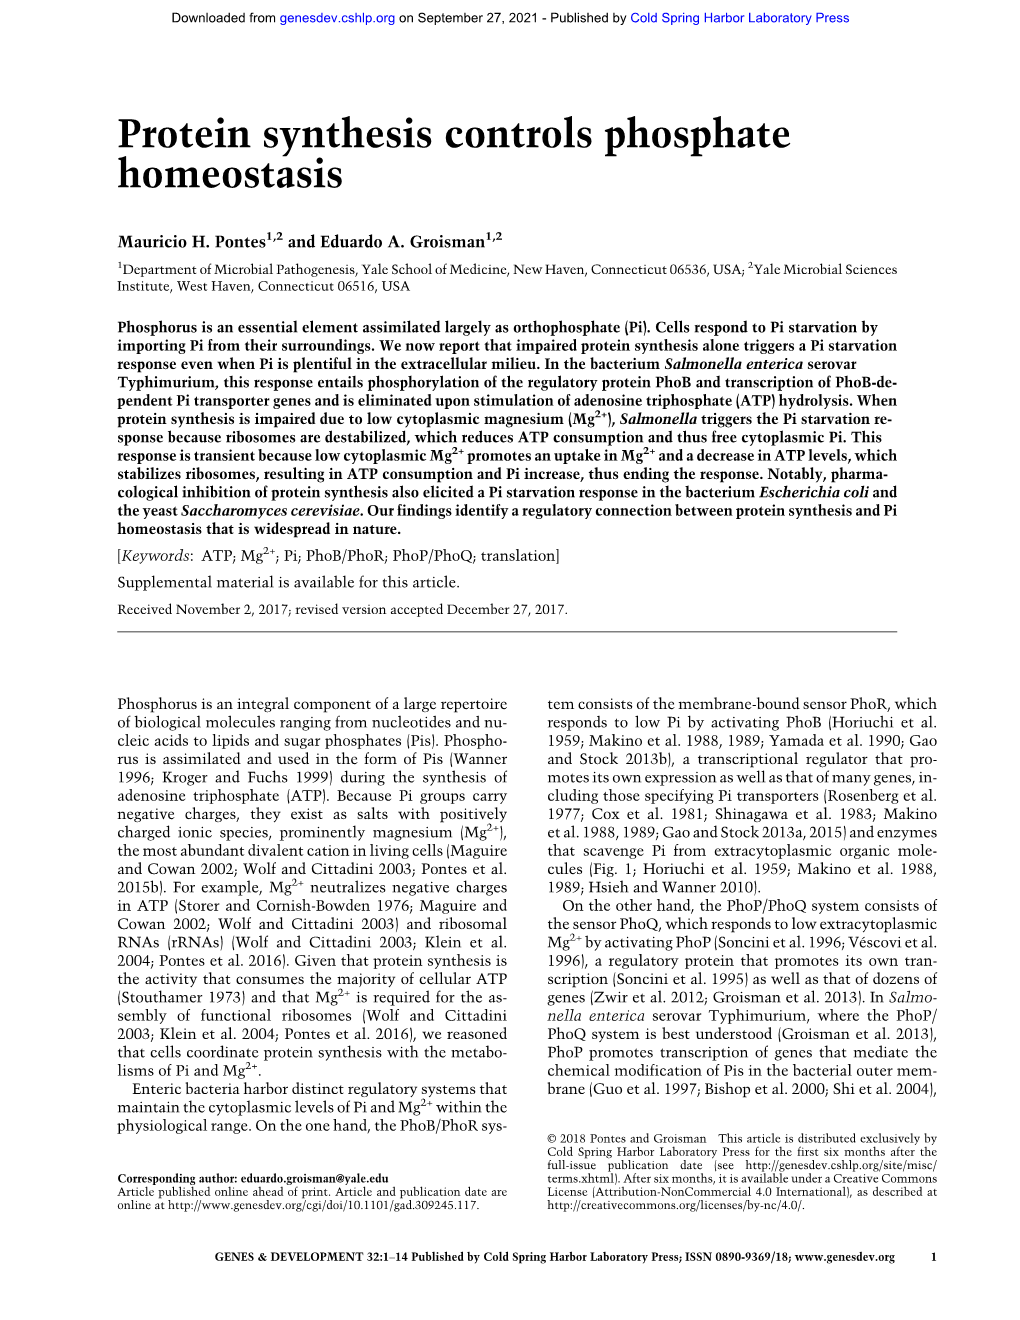 Protein Synthesis Controls Phosphate Homeostasis